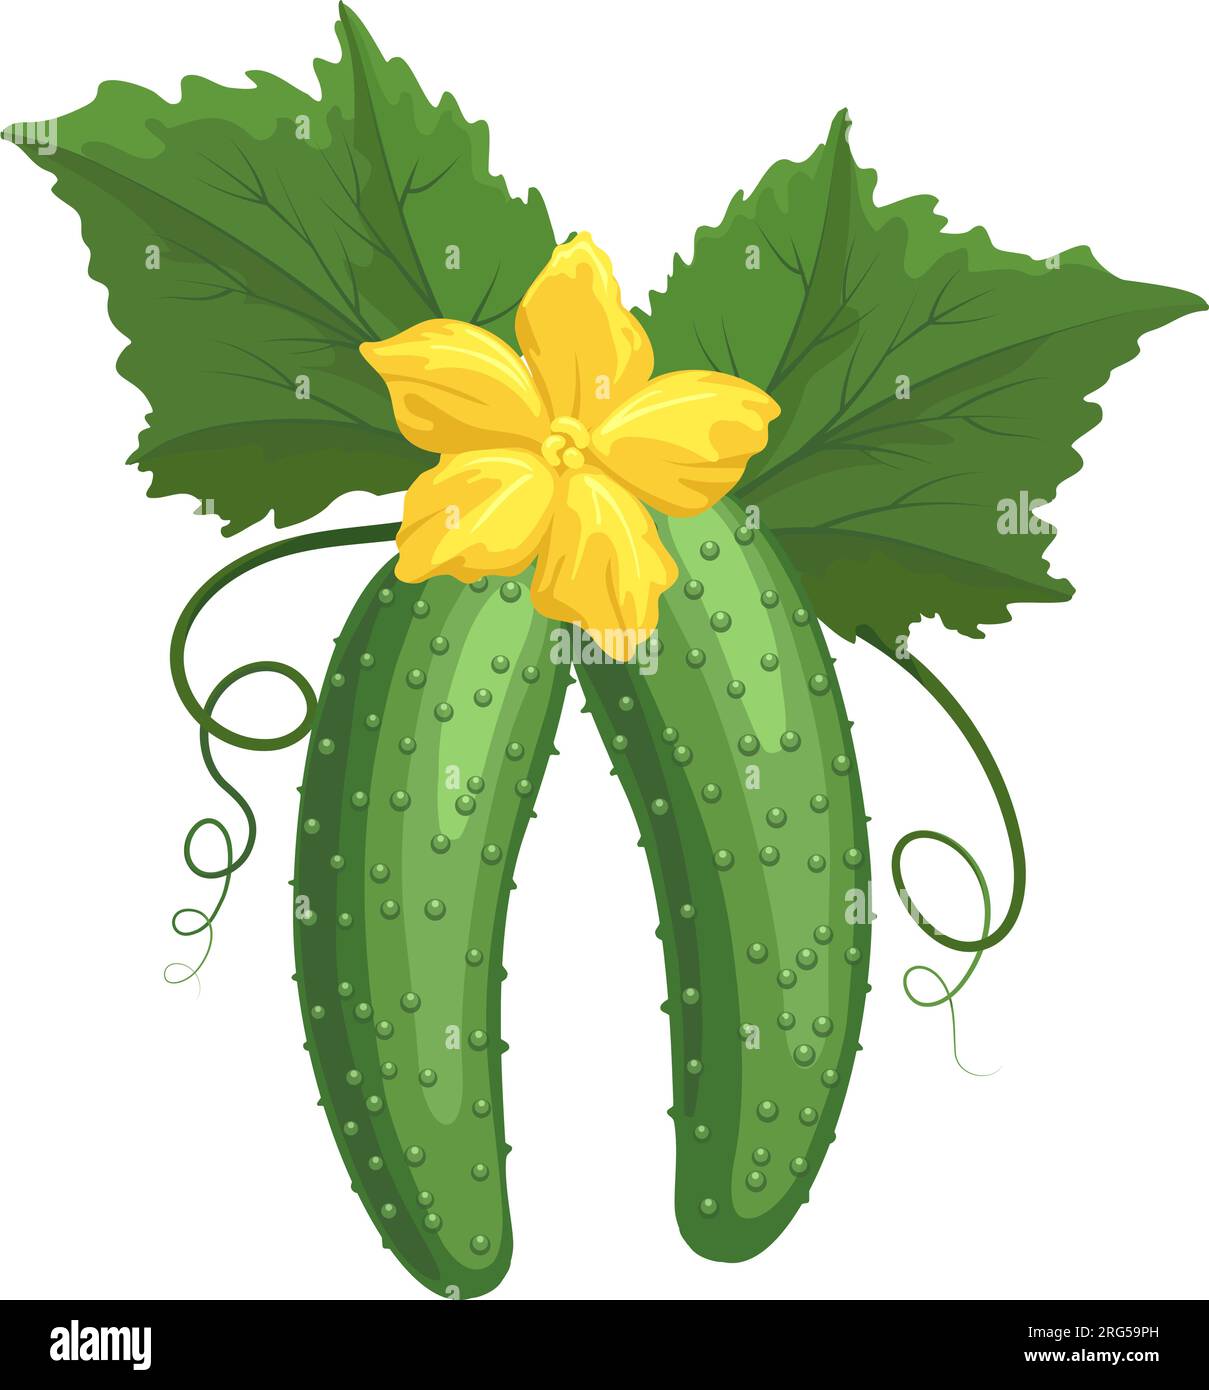 Cucumber plant cartoon drawing Stock Vector